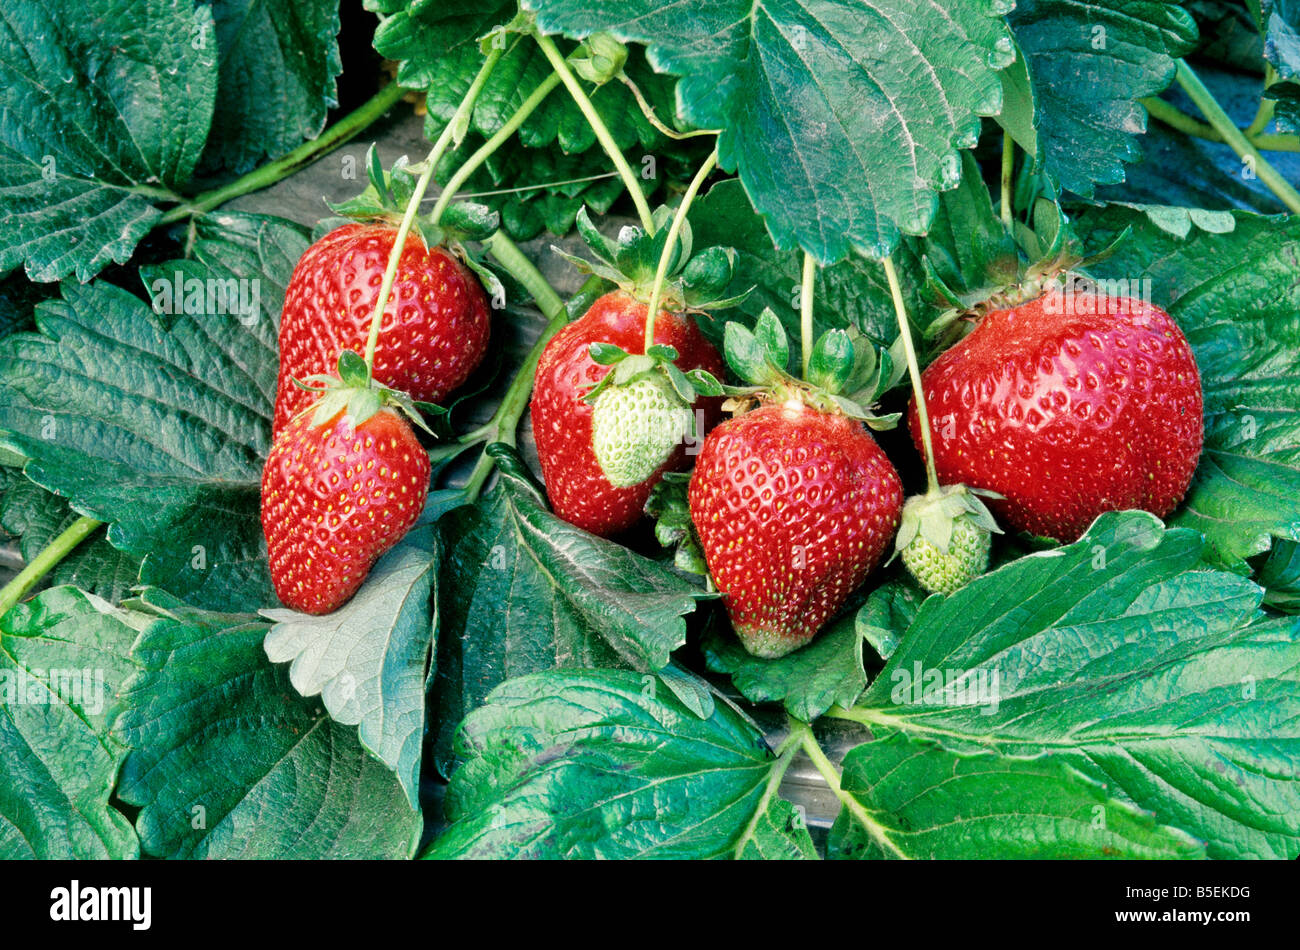 Ripe strawberries growing on vine. Stock Photo